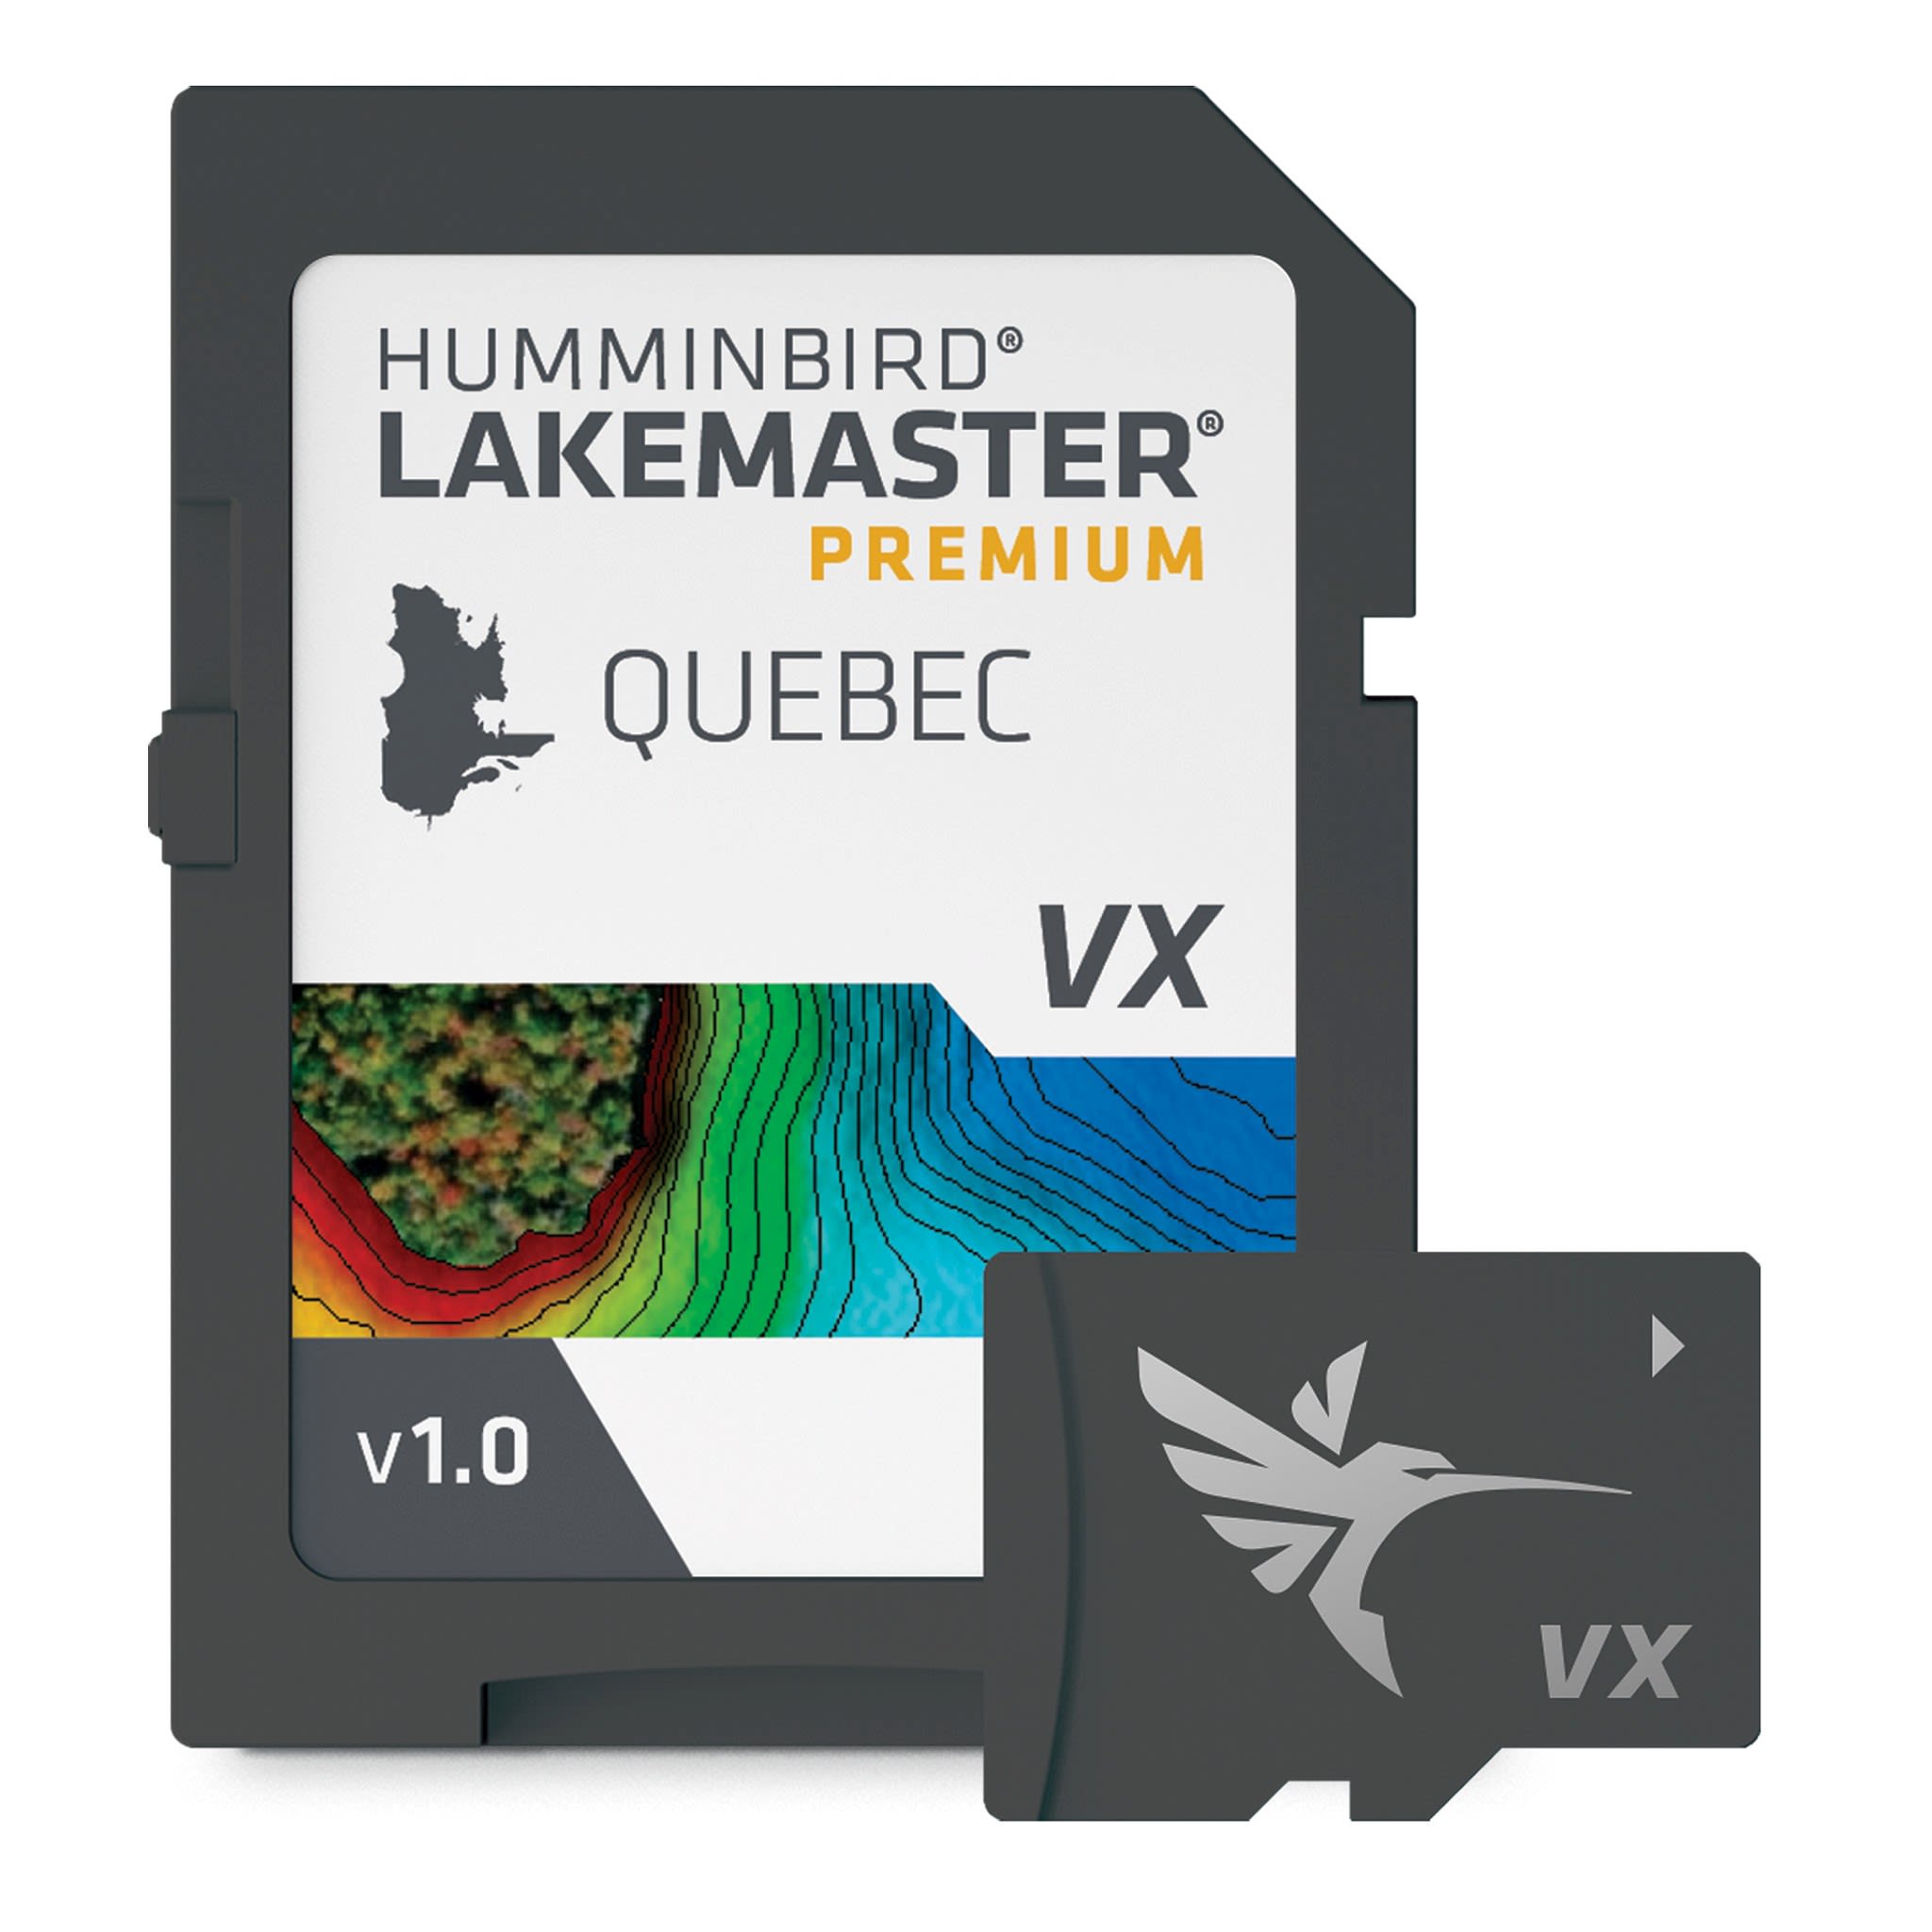 Humminbird® LakeMaster® VX Premium - Quebec